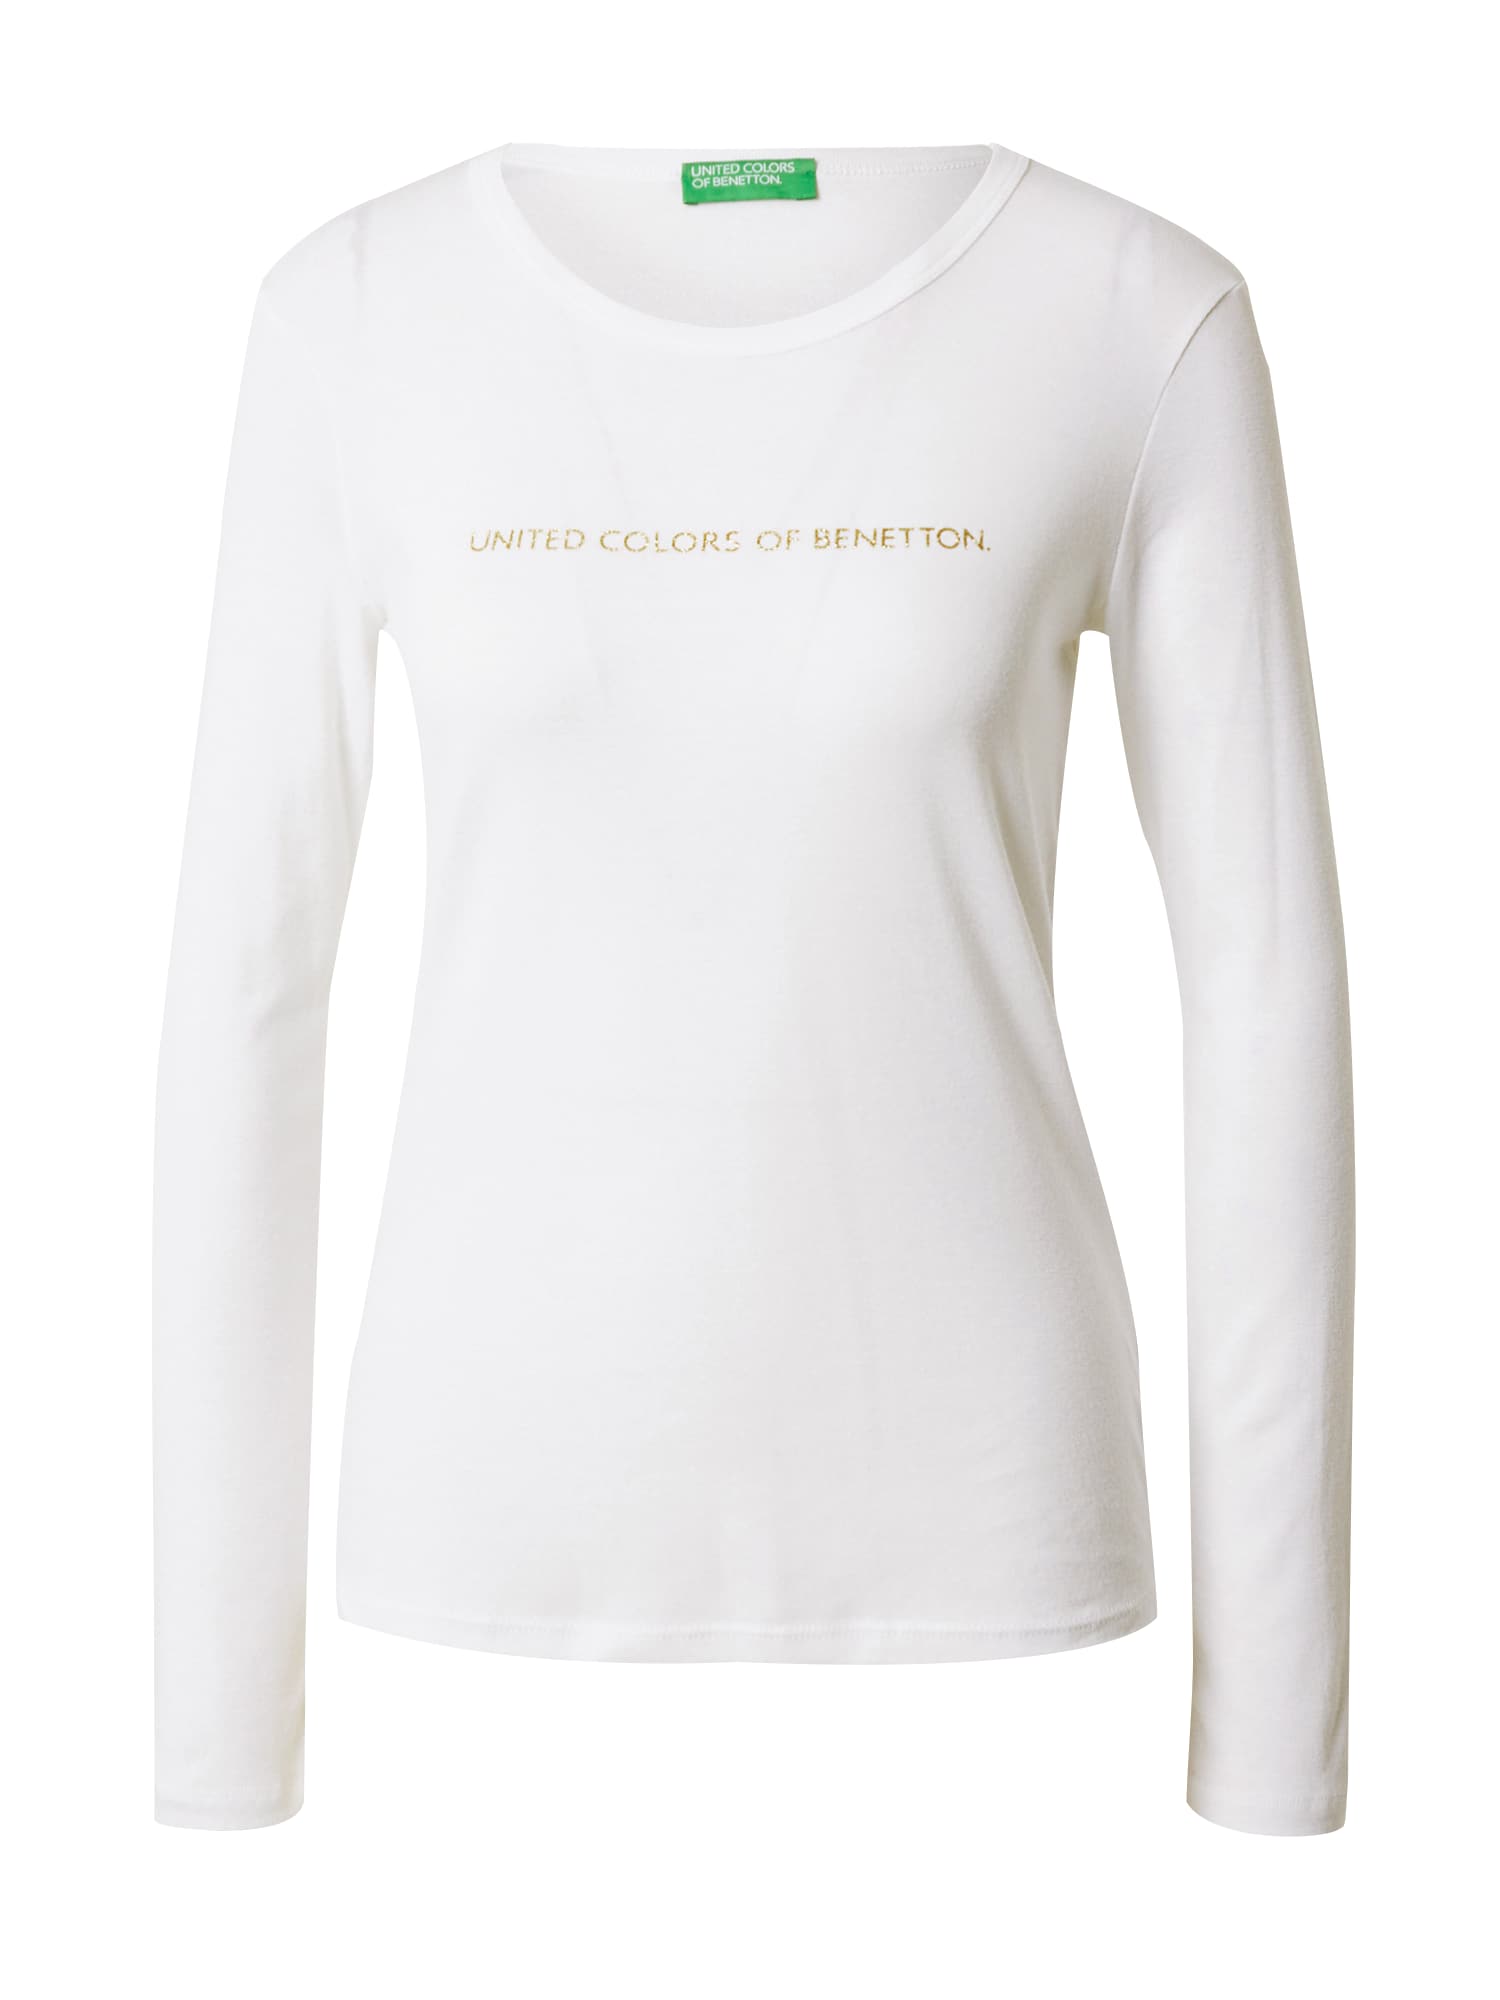 UNITED COLORS OF BENETTON Marškinėliai auksas / balta